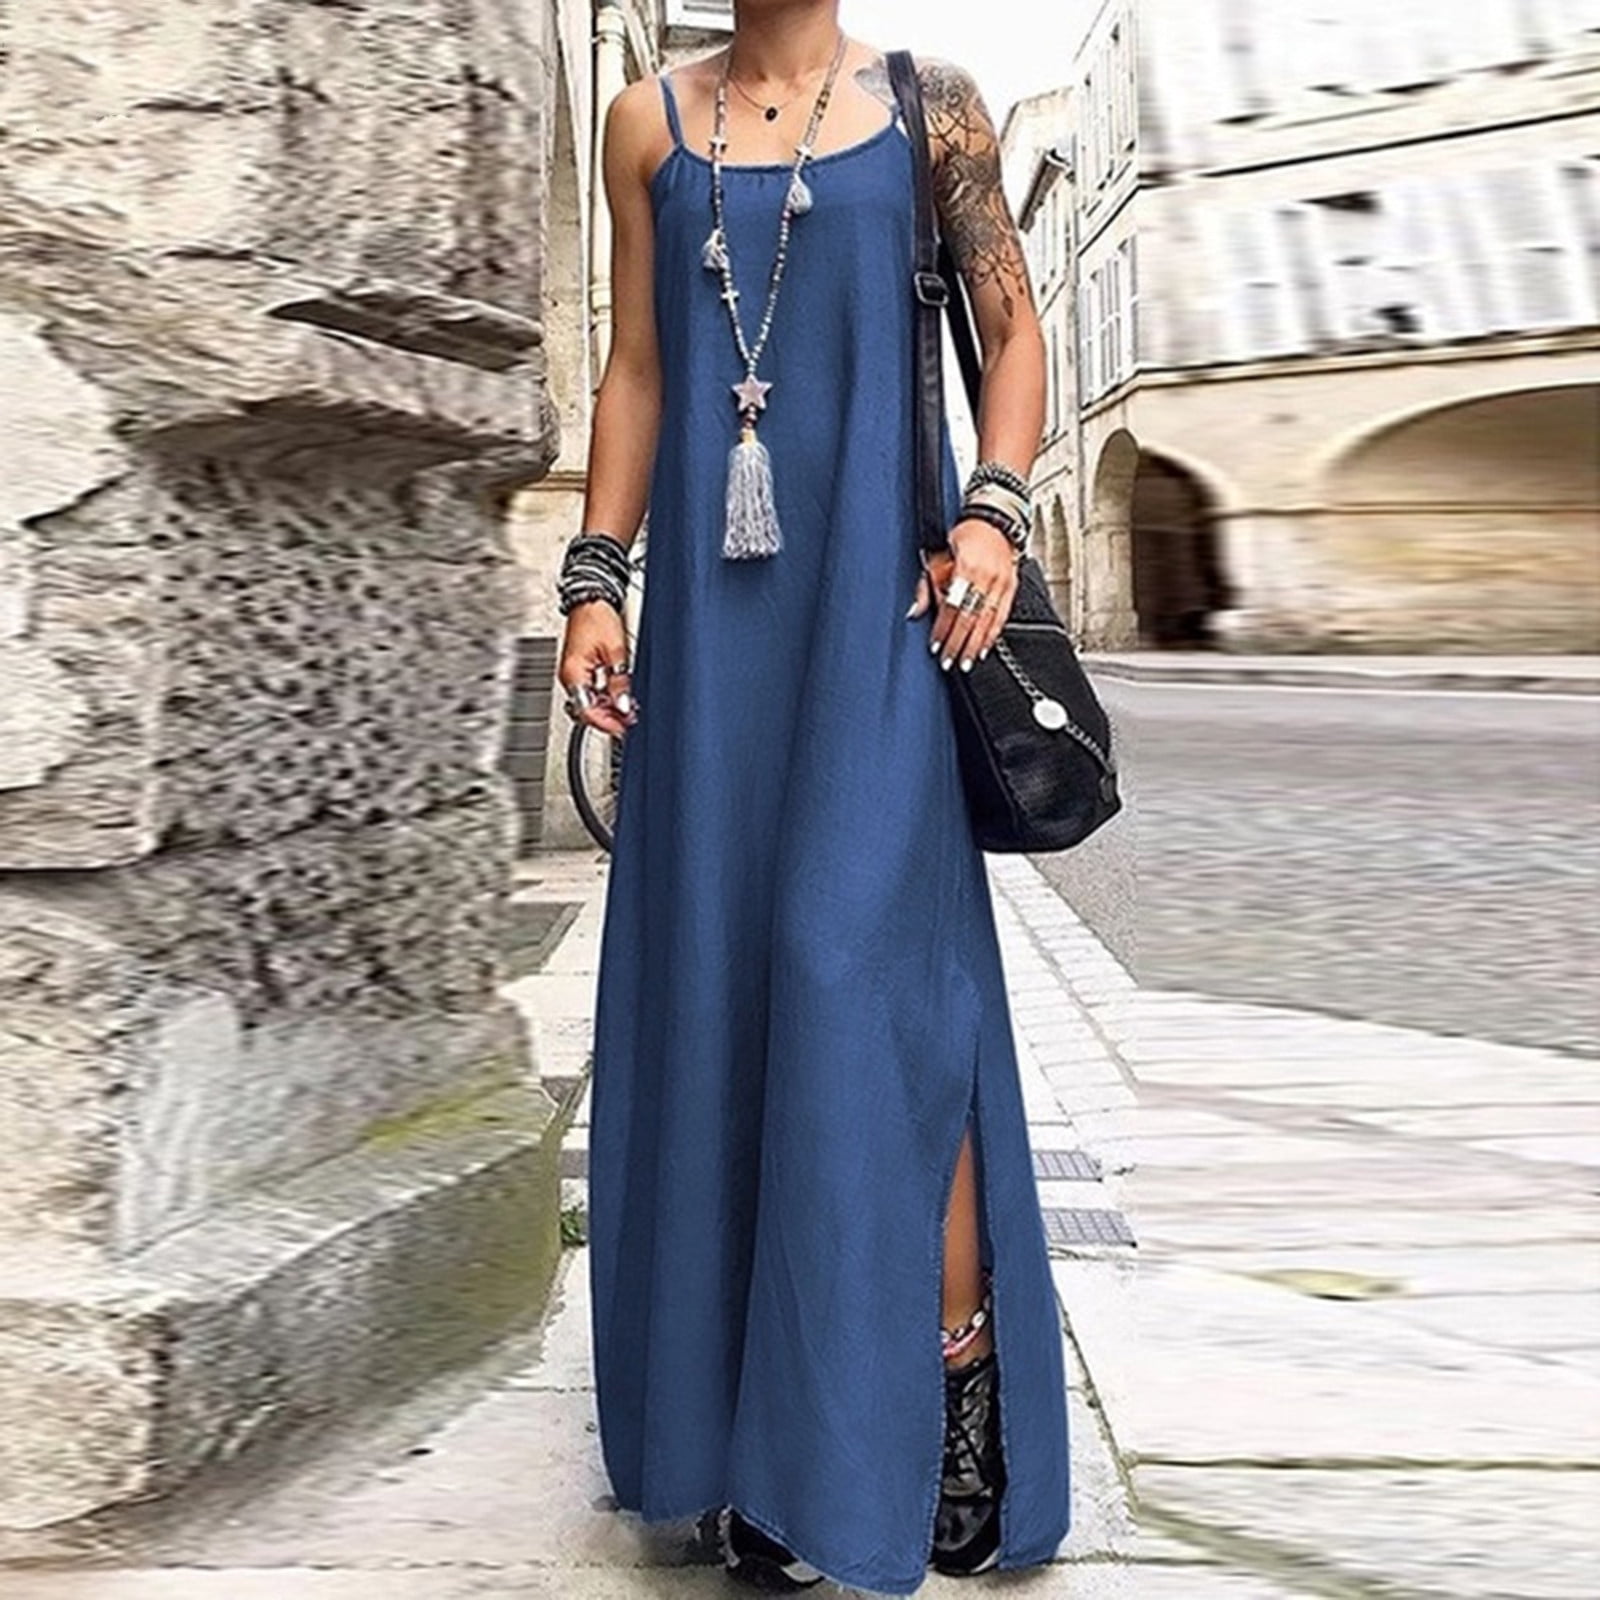 Sagton Tube Dresses for Women Bohemian Maxi Dress Half-Length Denim Tube Top Dress 